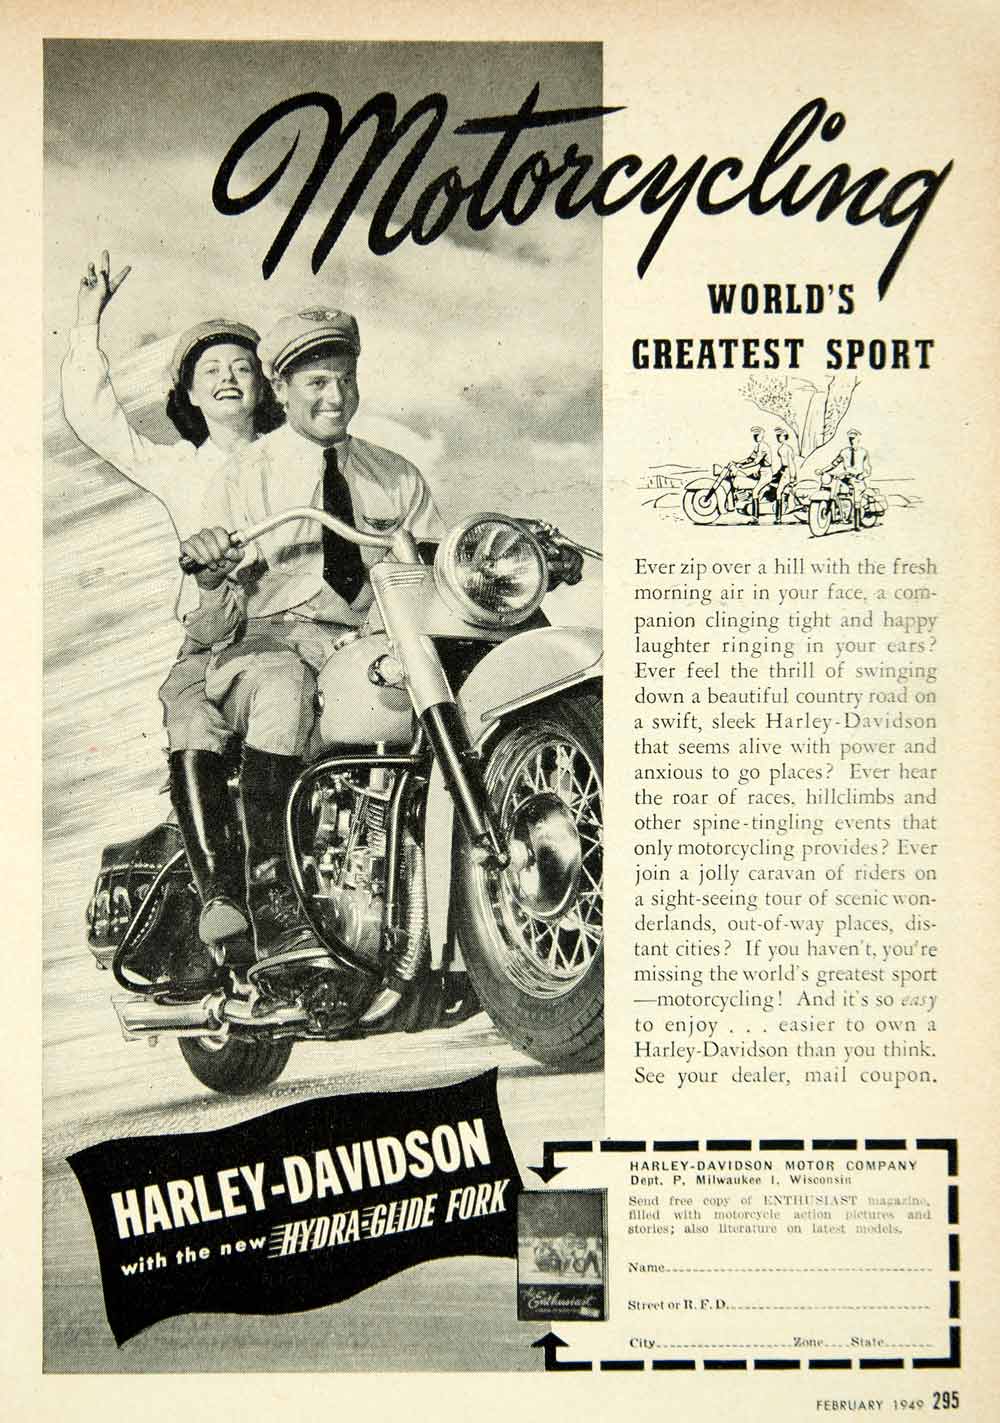 1949 Ad Harley-Davidson Hydra-Glide Fork Motorcycle Motorbike Enthusiast PSC2